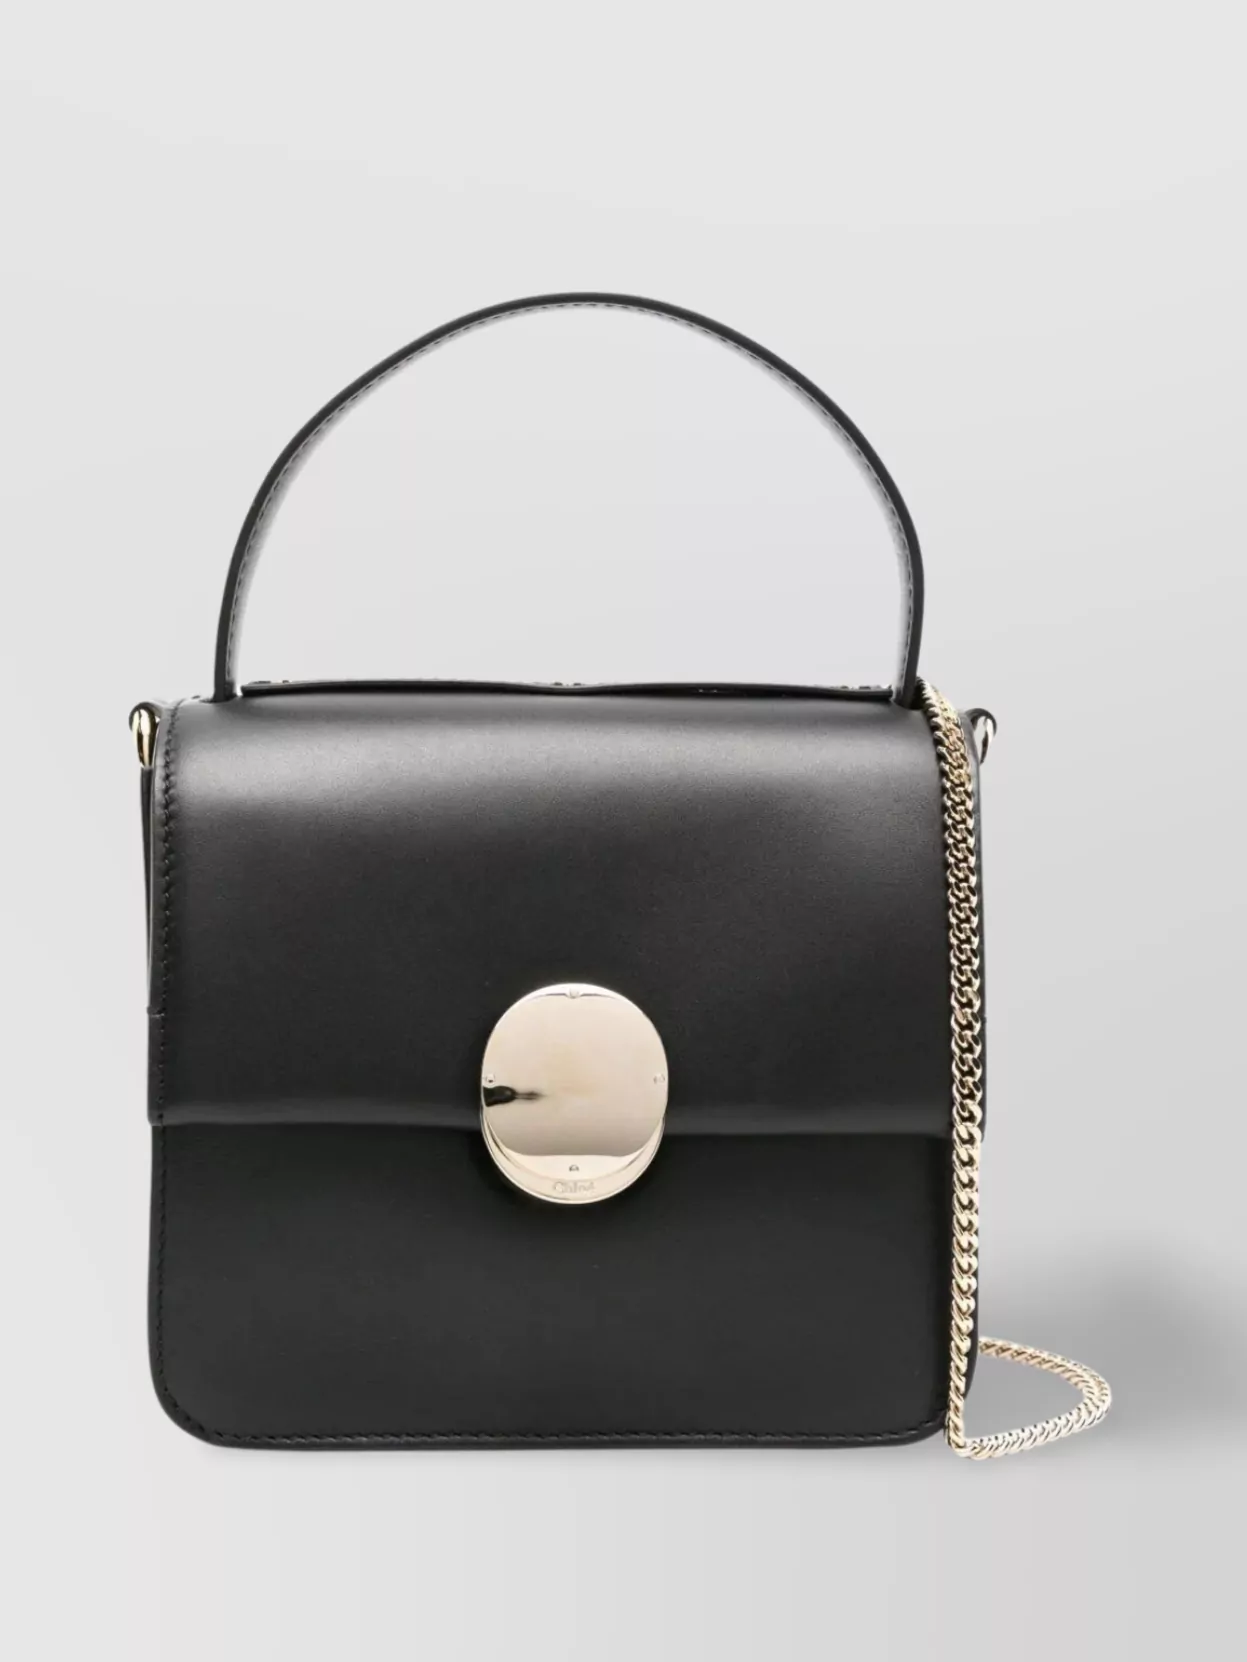 Chloé Penelope Leather Top Handle Bag In Black